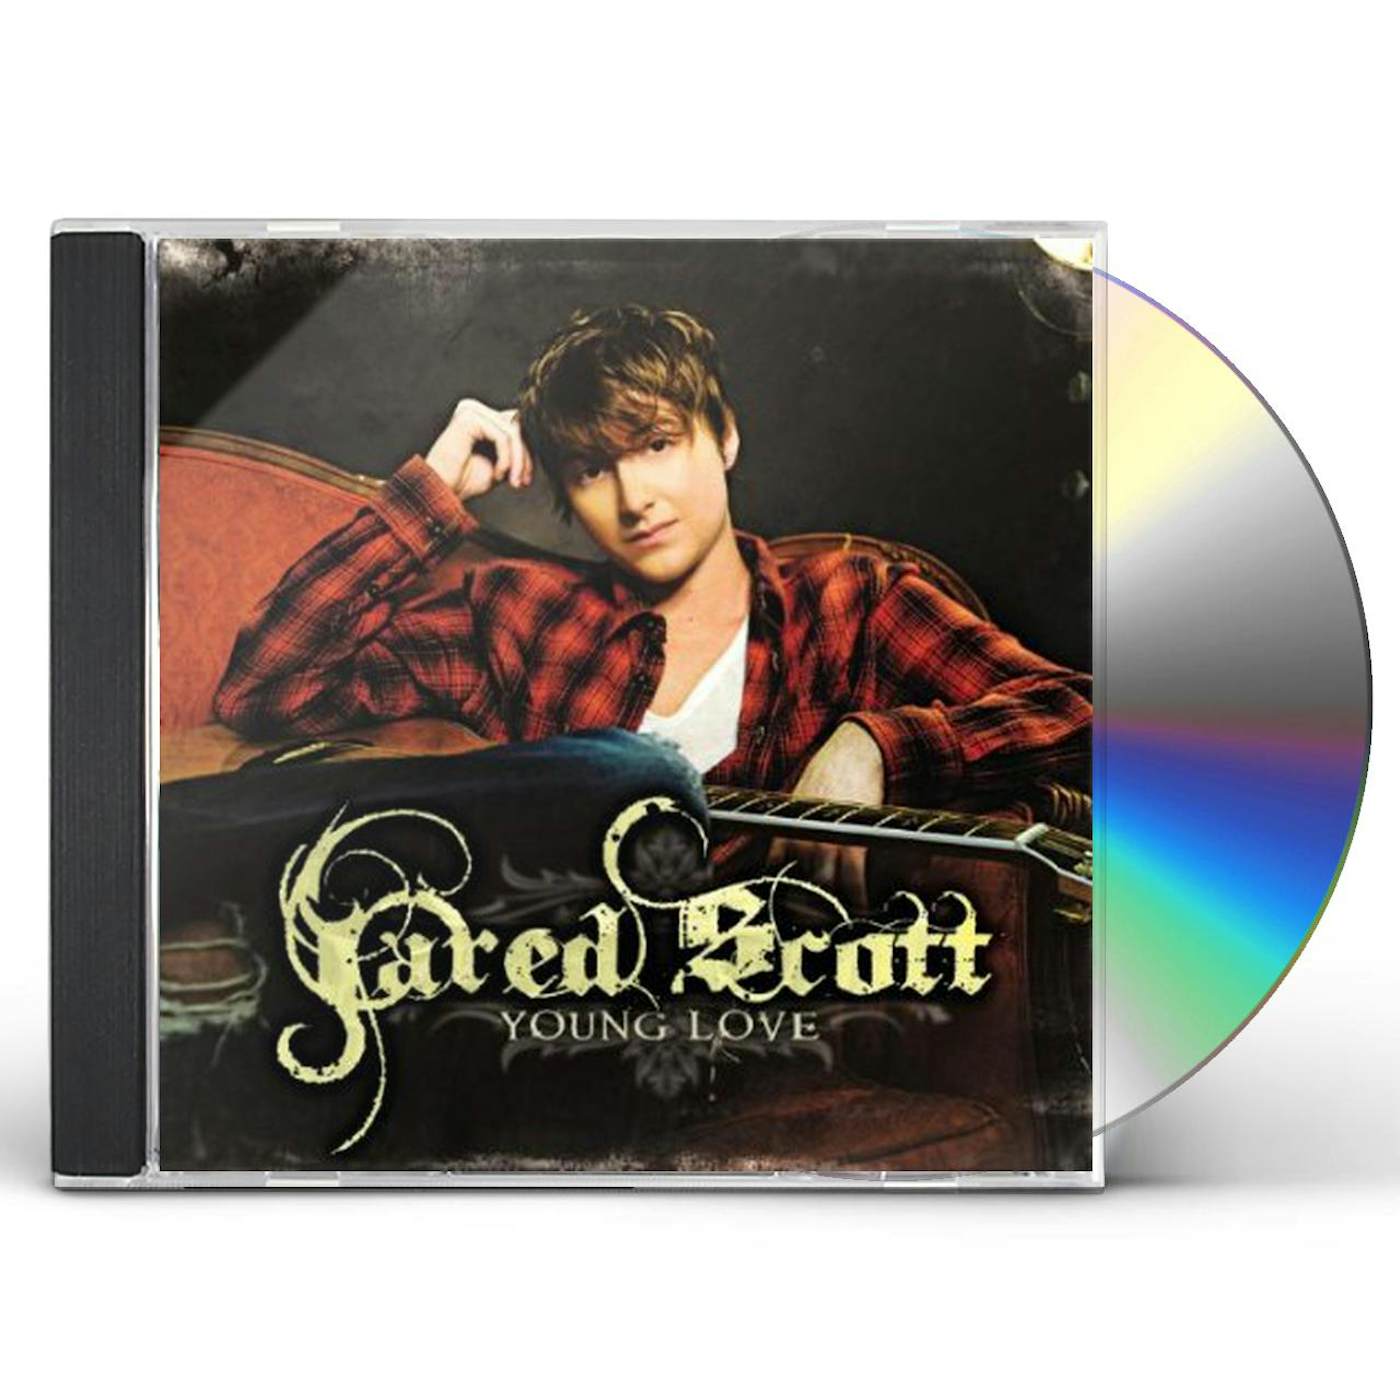 Jared Scott YOUNG LOVE CD